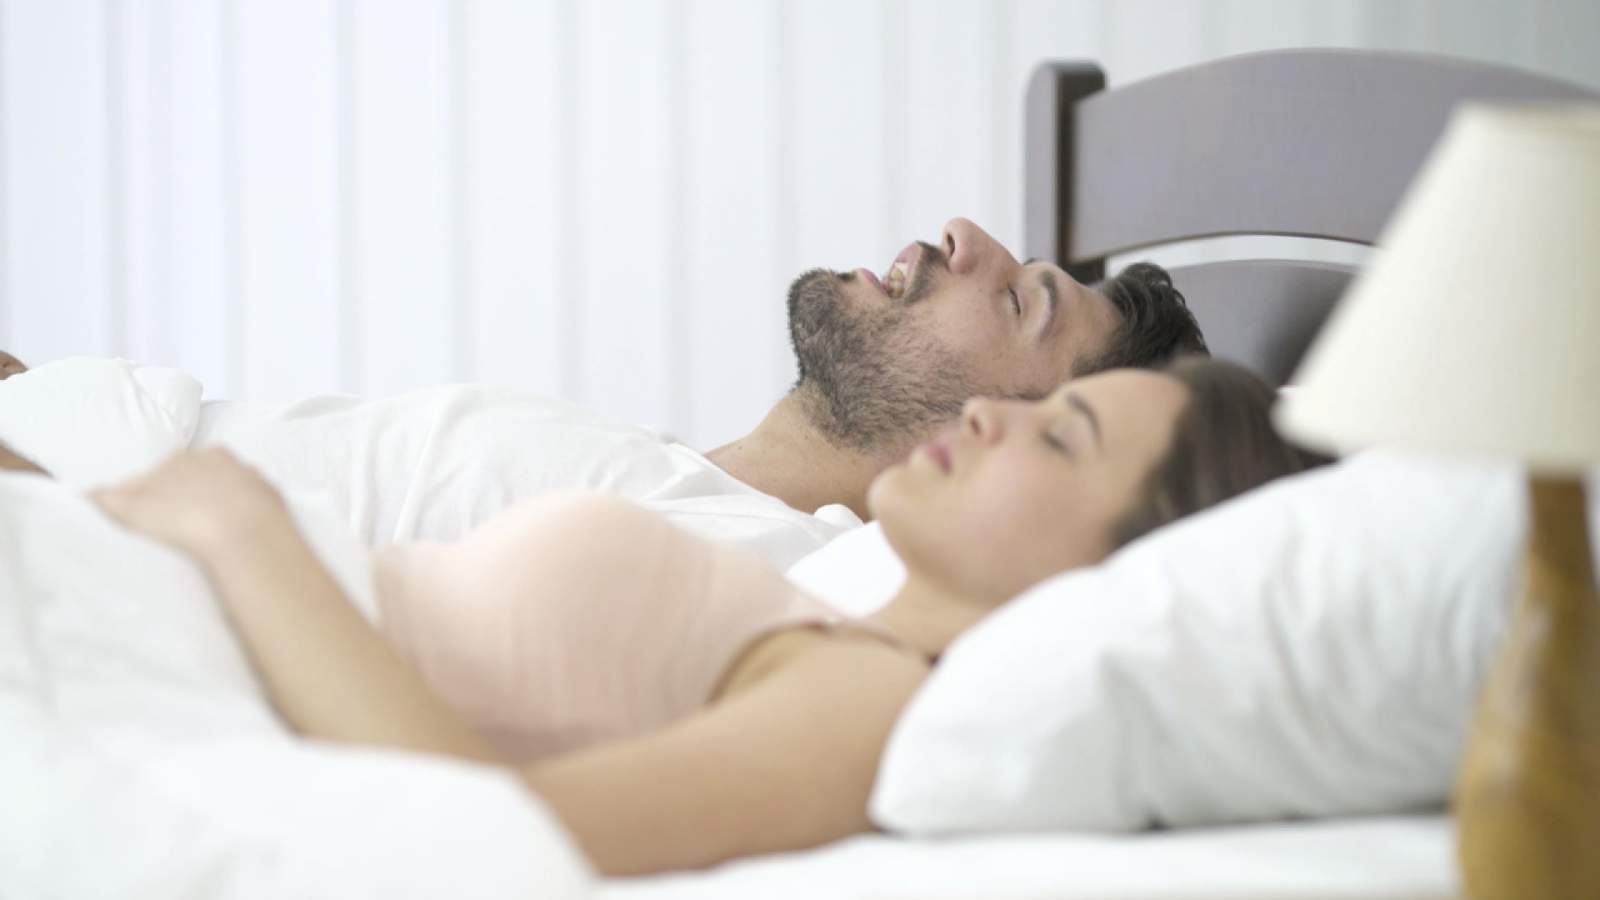 Snoring at night? Take this sleep test to see if you have sleep apnea